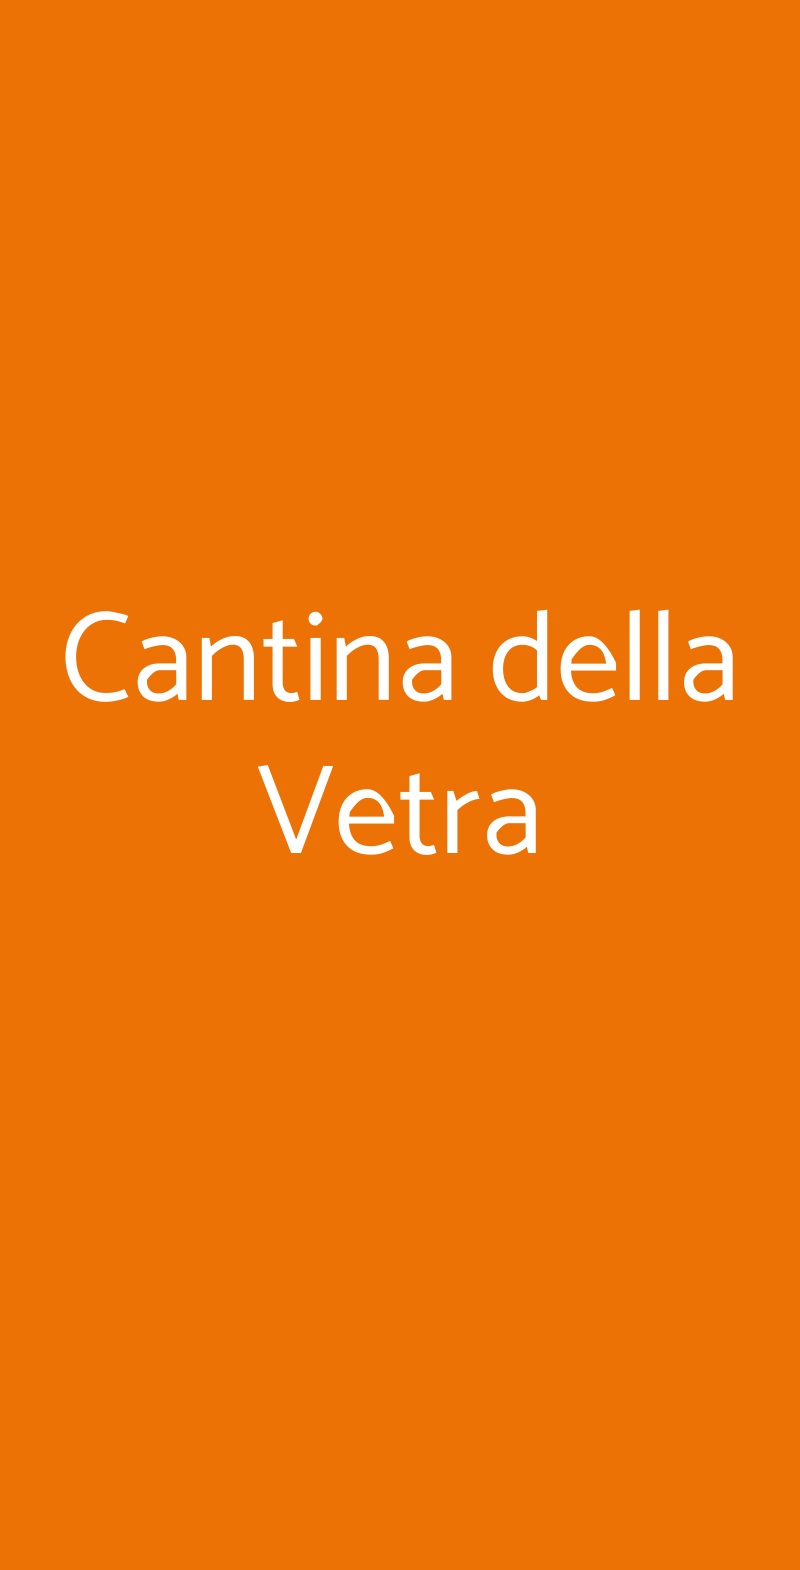 Cantina della Vetra Milano menù 1 pagina